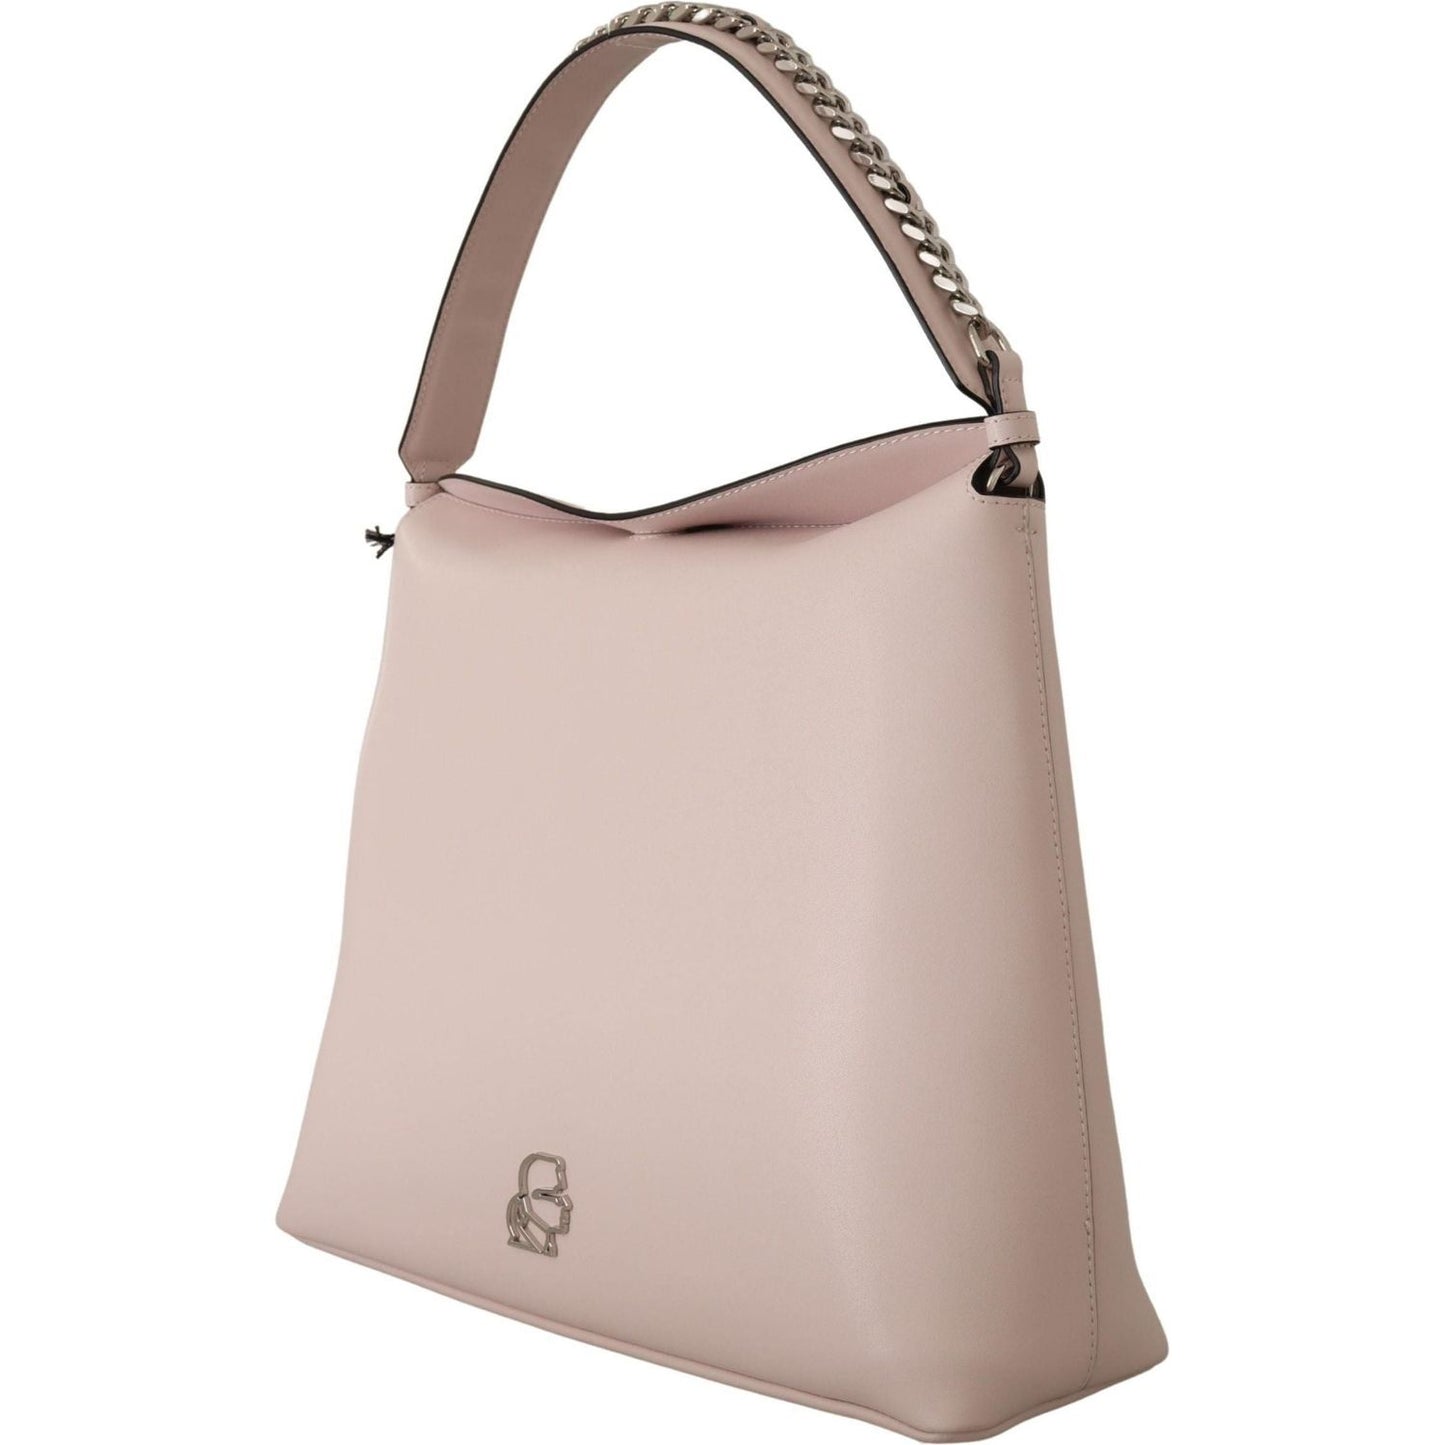 Karl Lagerfeld Elegant Mauve Chalk Leather Shoulder Bag light-pink-mauve-leather-shoulder-bag IMG_7436-scaled-2b0775db-b59.jpg